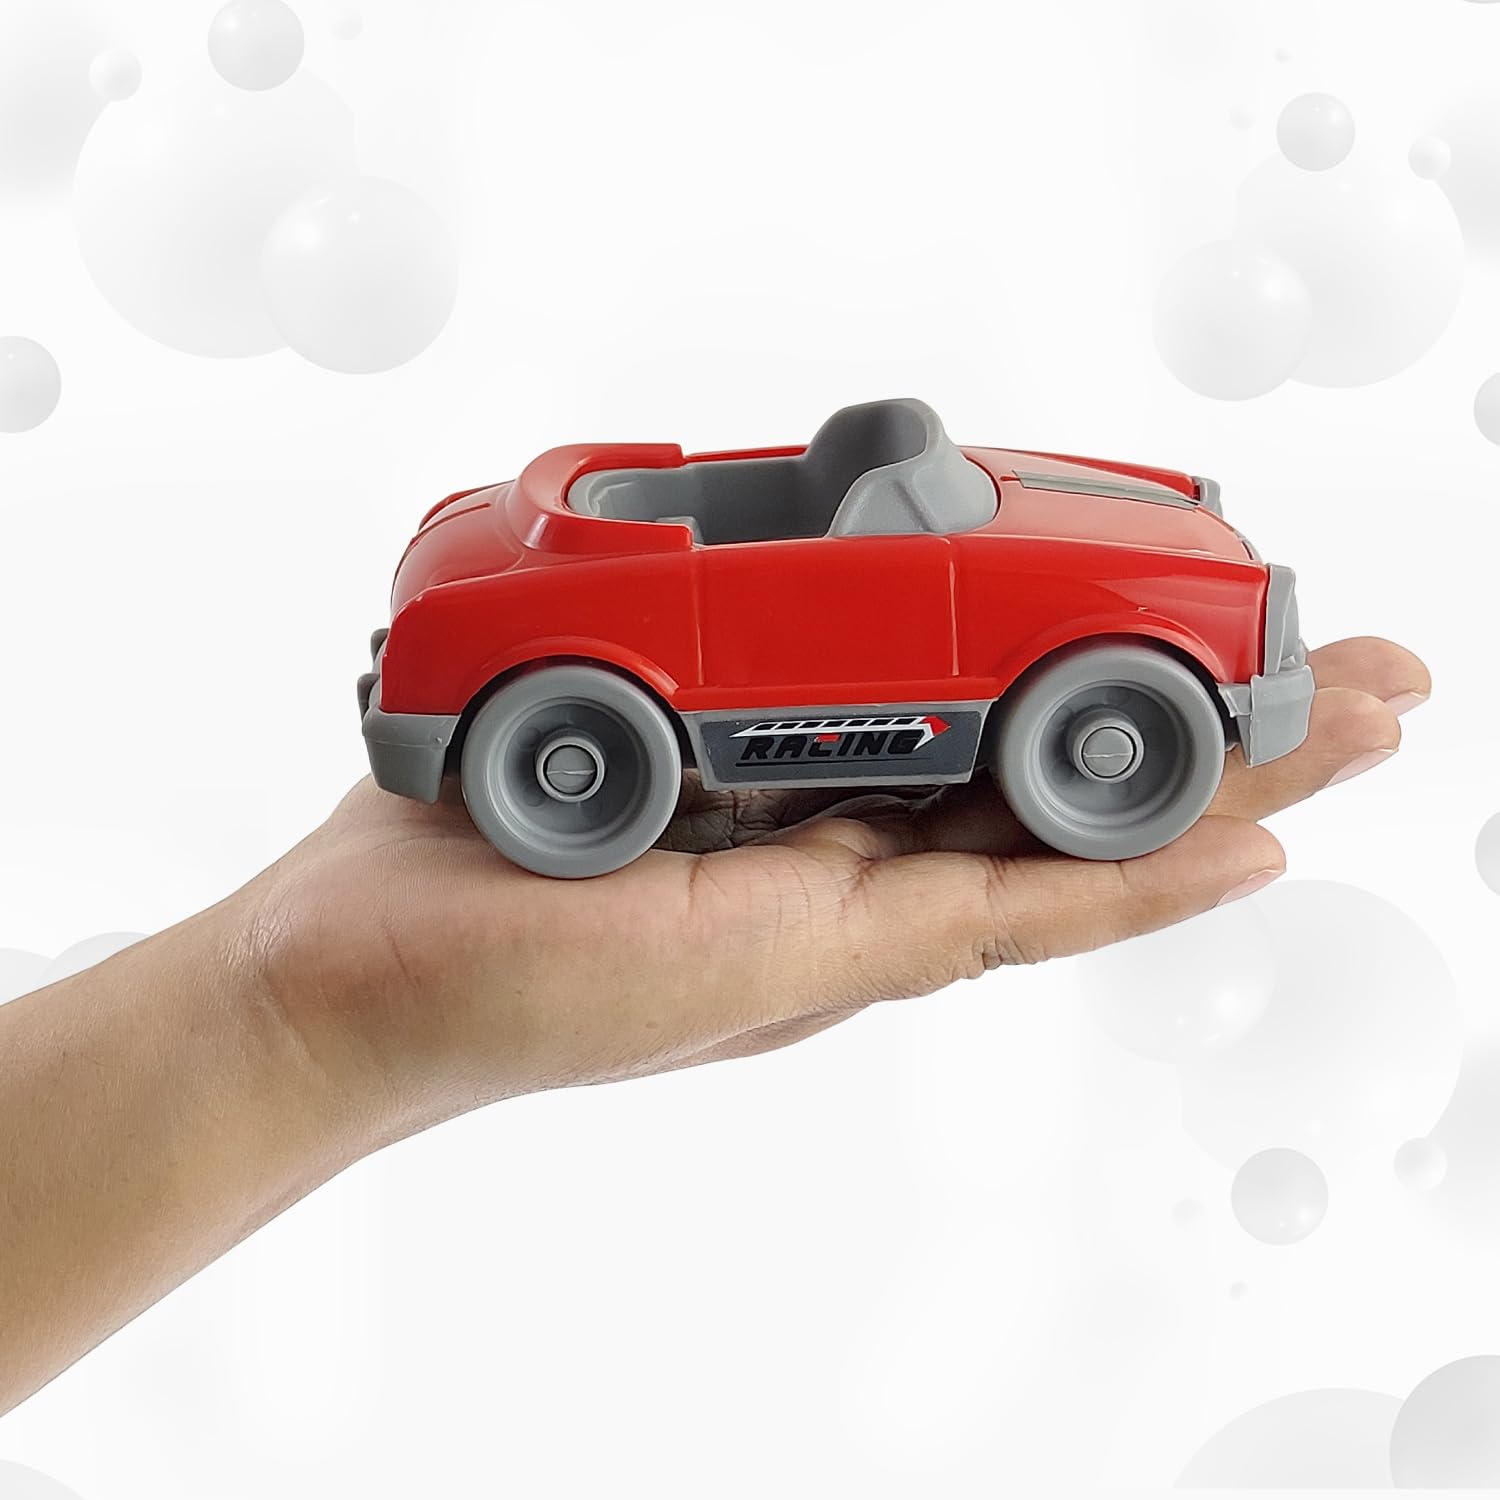 Speedy Wheels Pull & Push Racing Toy Cars Set